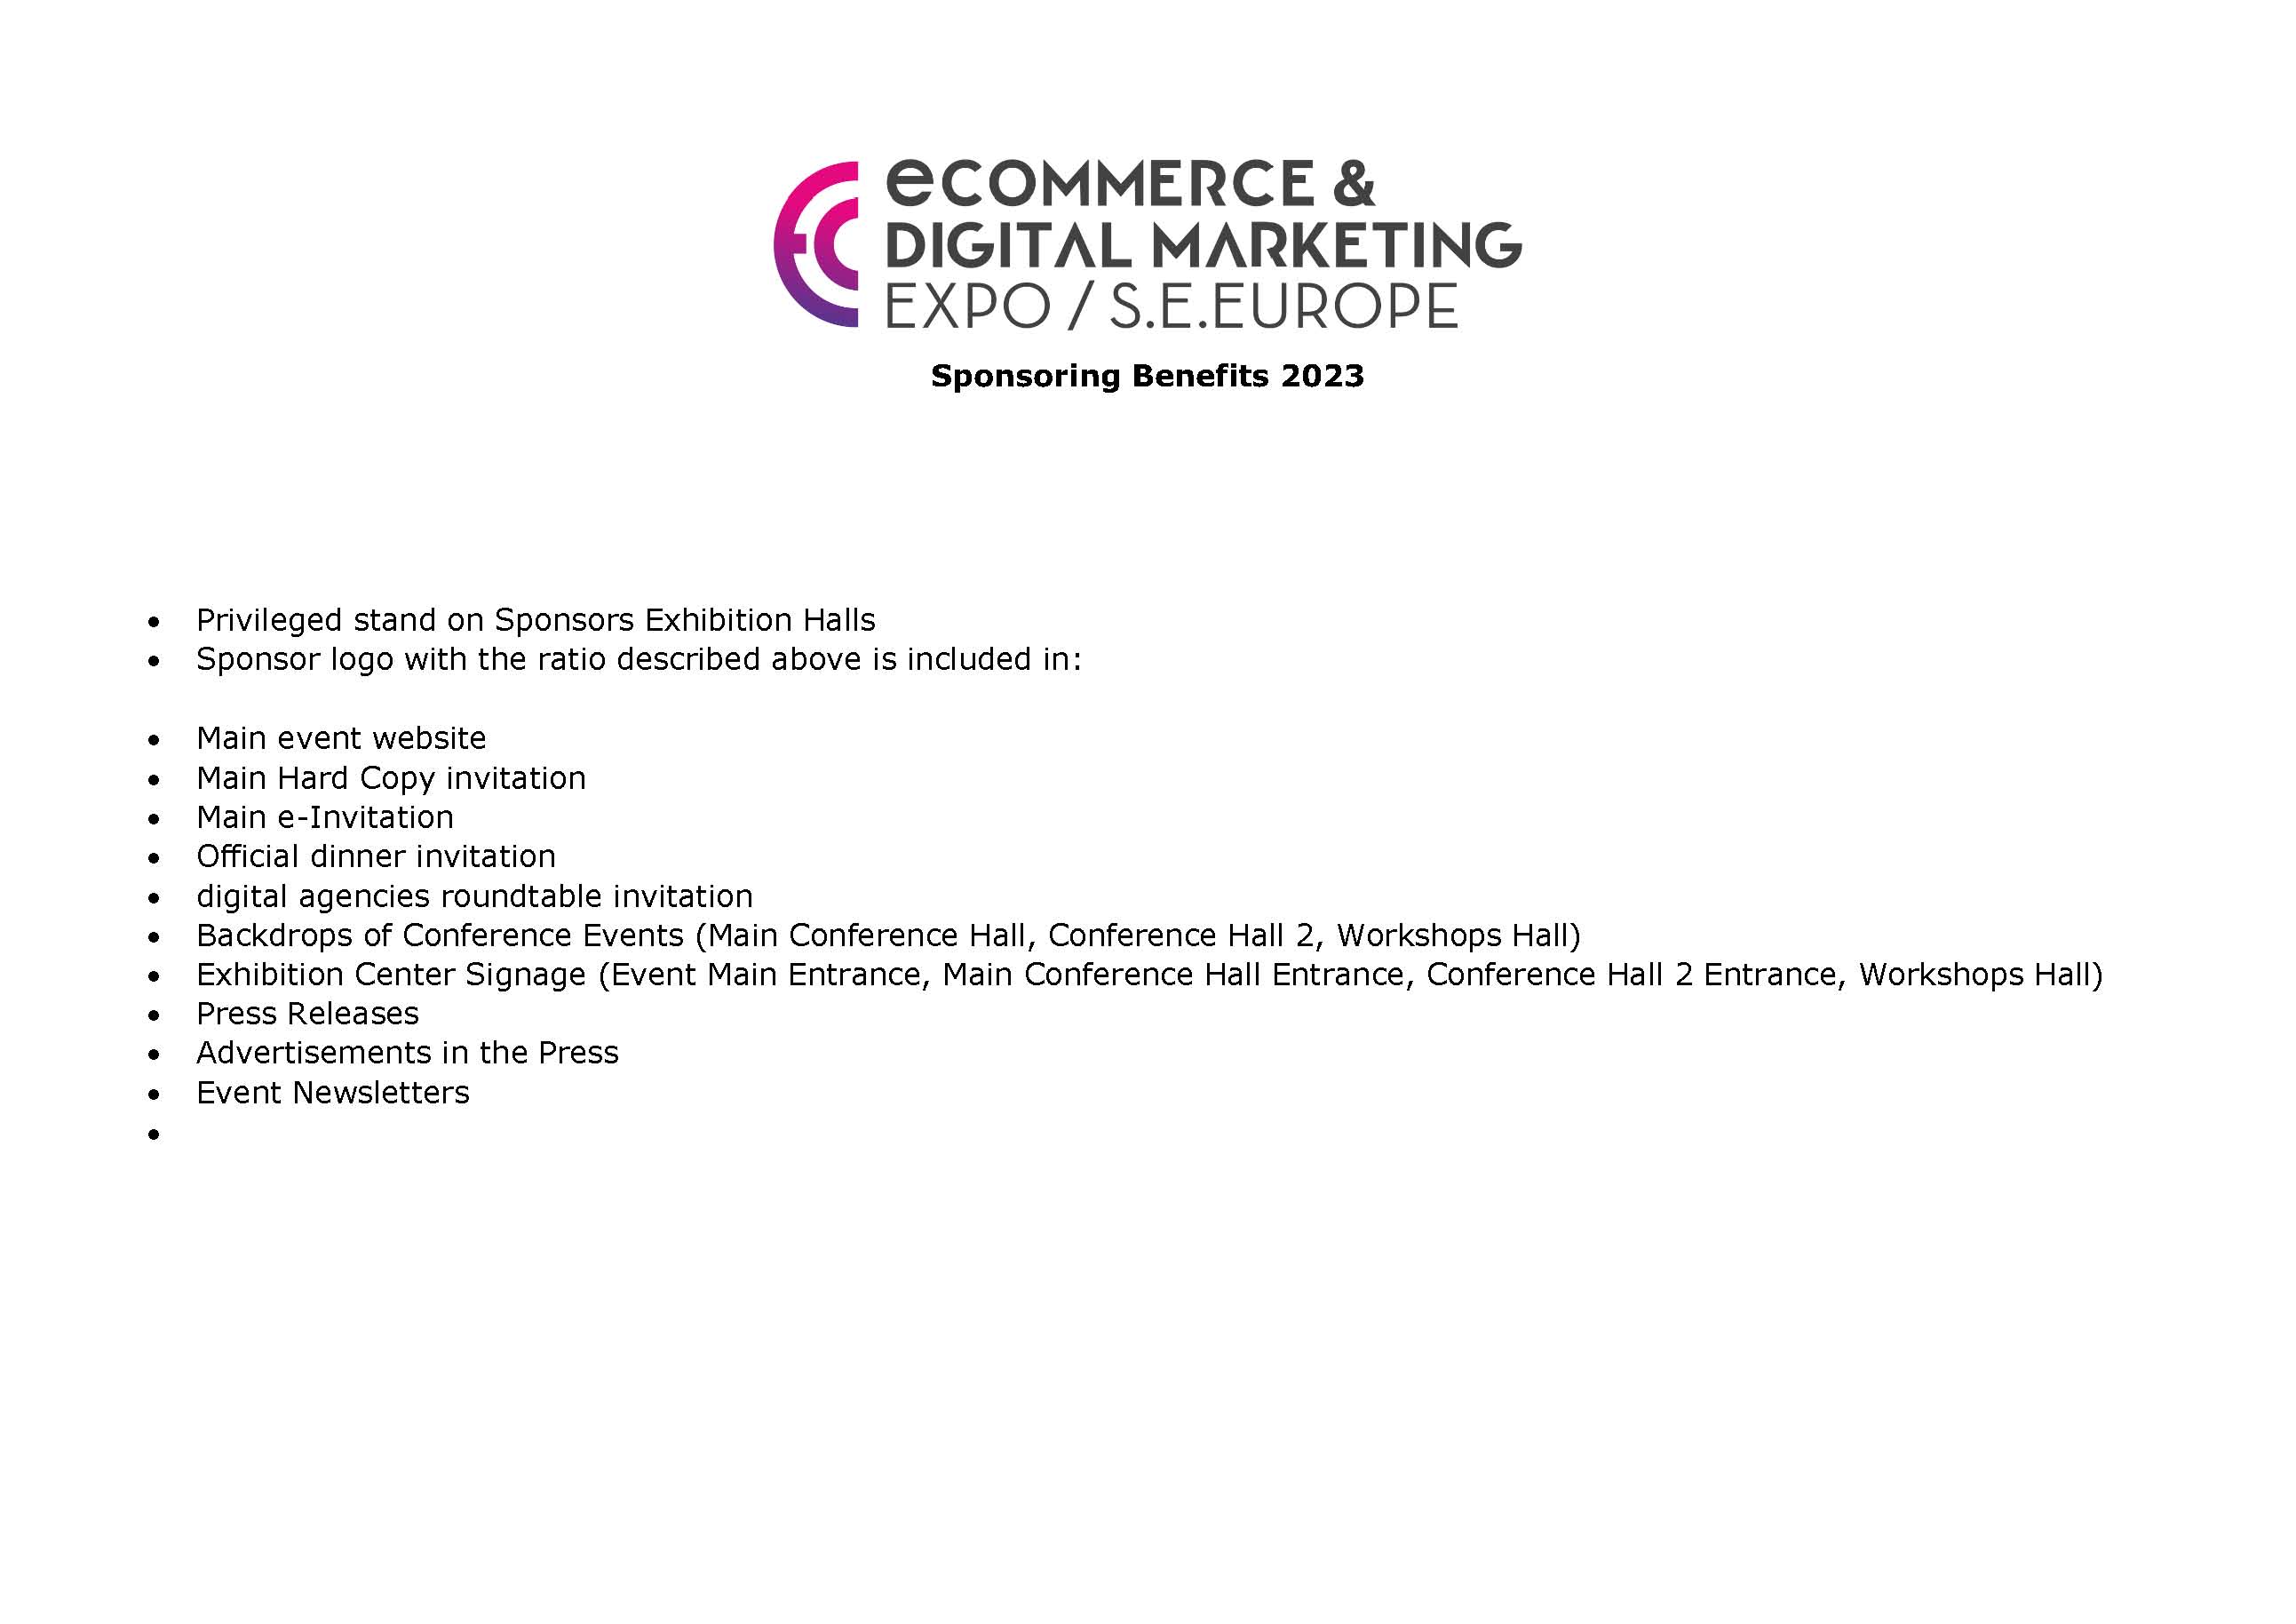 ECDM_Expo_2023_Sponsors_Benefits_EN.jpg